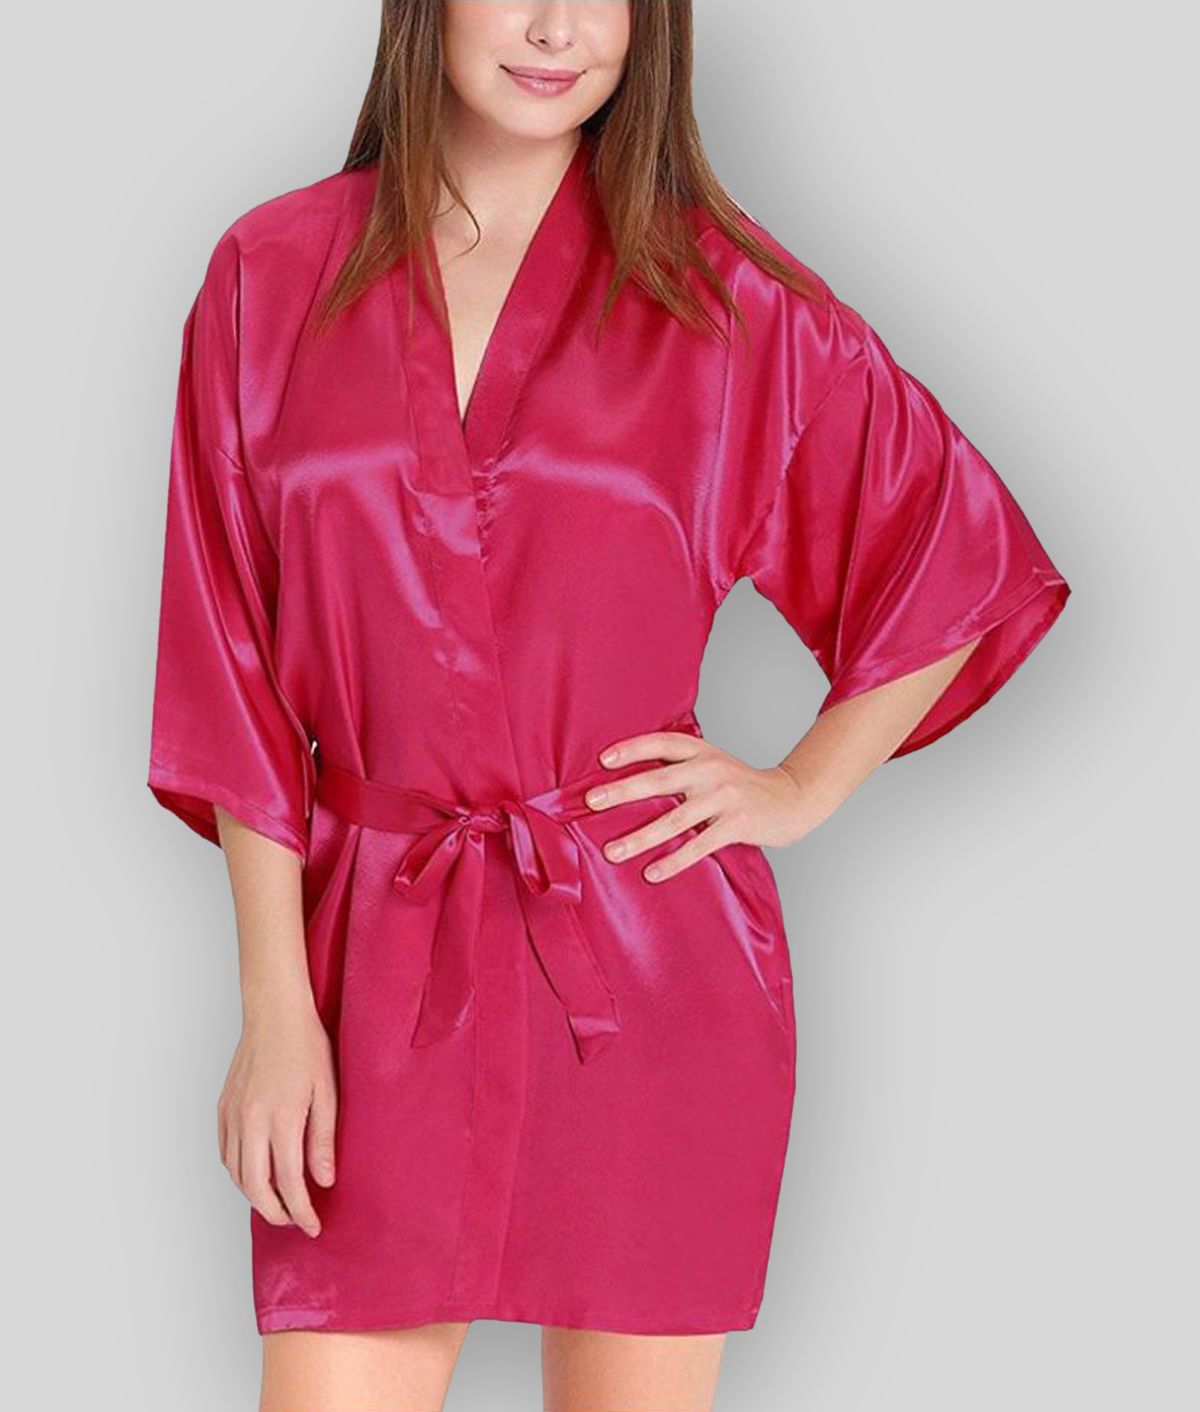     			FEIJOA - Pink Satin Women's Nightwear Robes ( Pack of 1 )